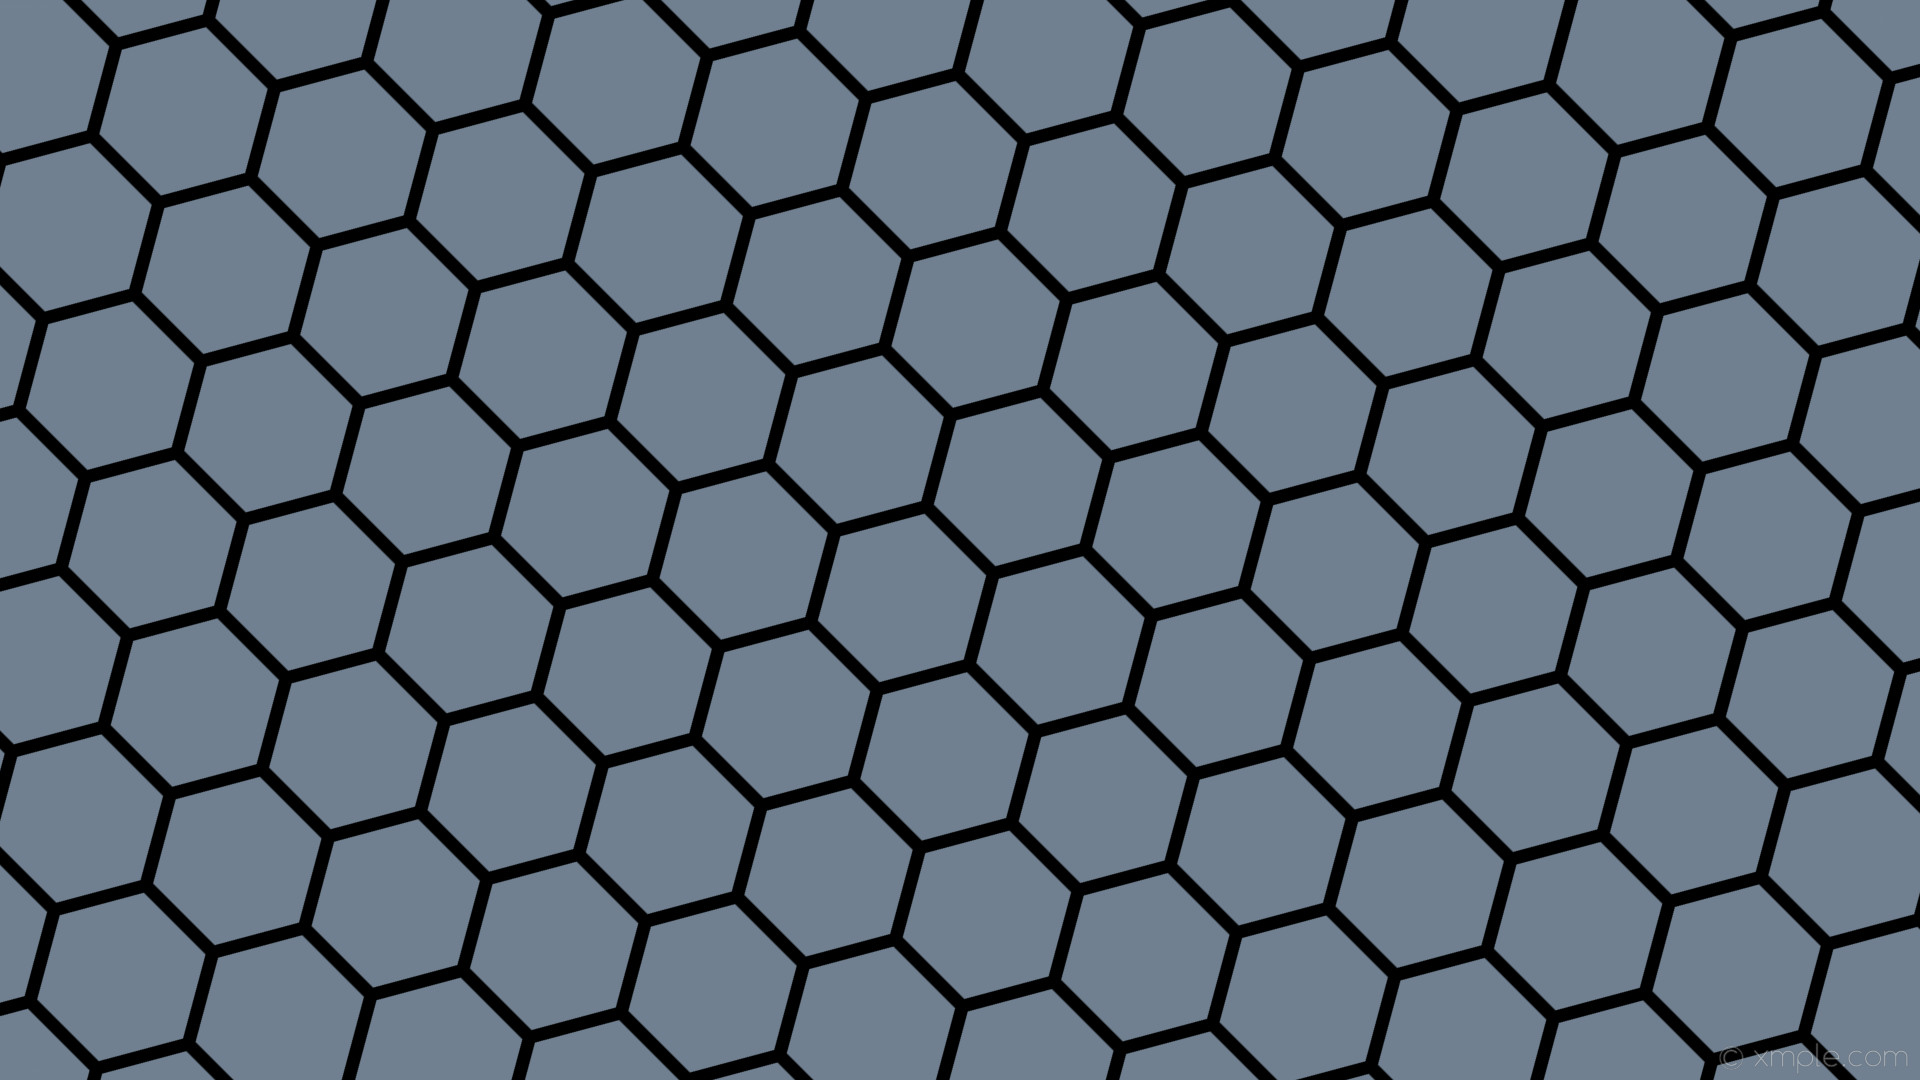 1920x1080 wallpaper beehive honeycomb black hexagon grey slate gray #708090 #000000  diagonal 45Â° 13px